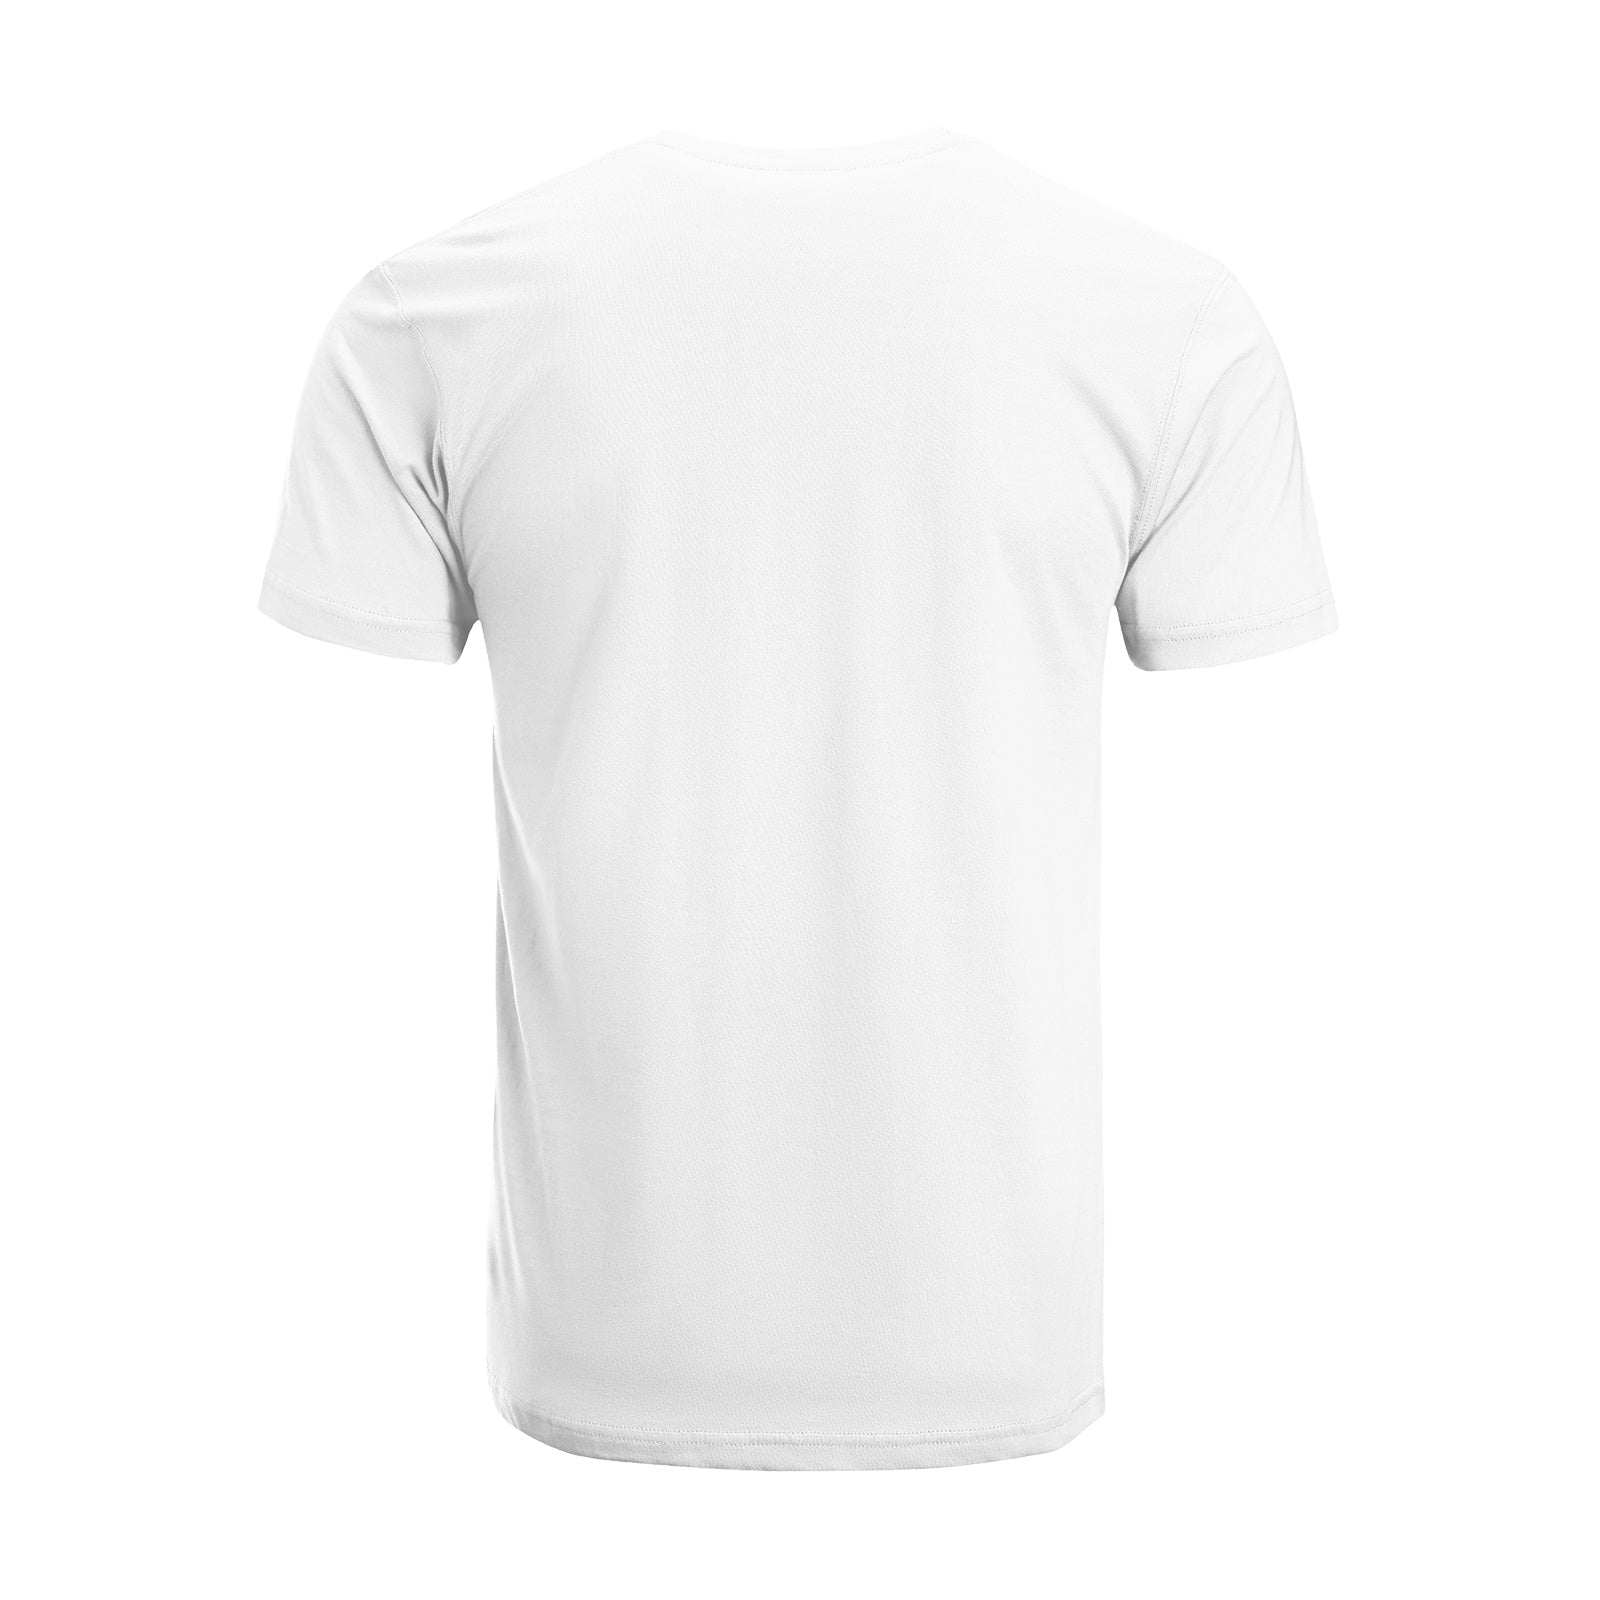 Unisex Short Sleeve Crew Neck Cotton Jersey T-Shirt CAT 47 - Tara-Outfits.com